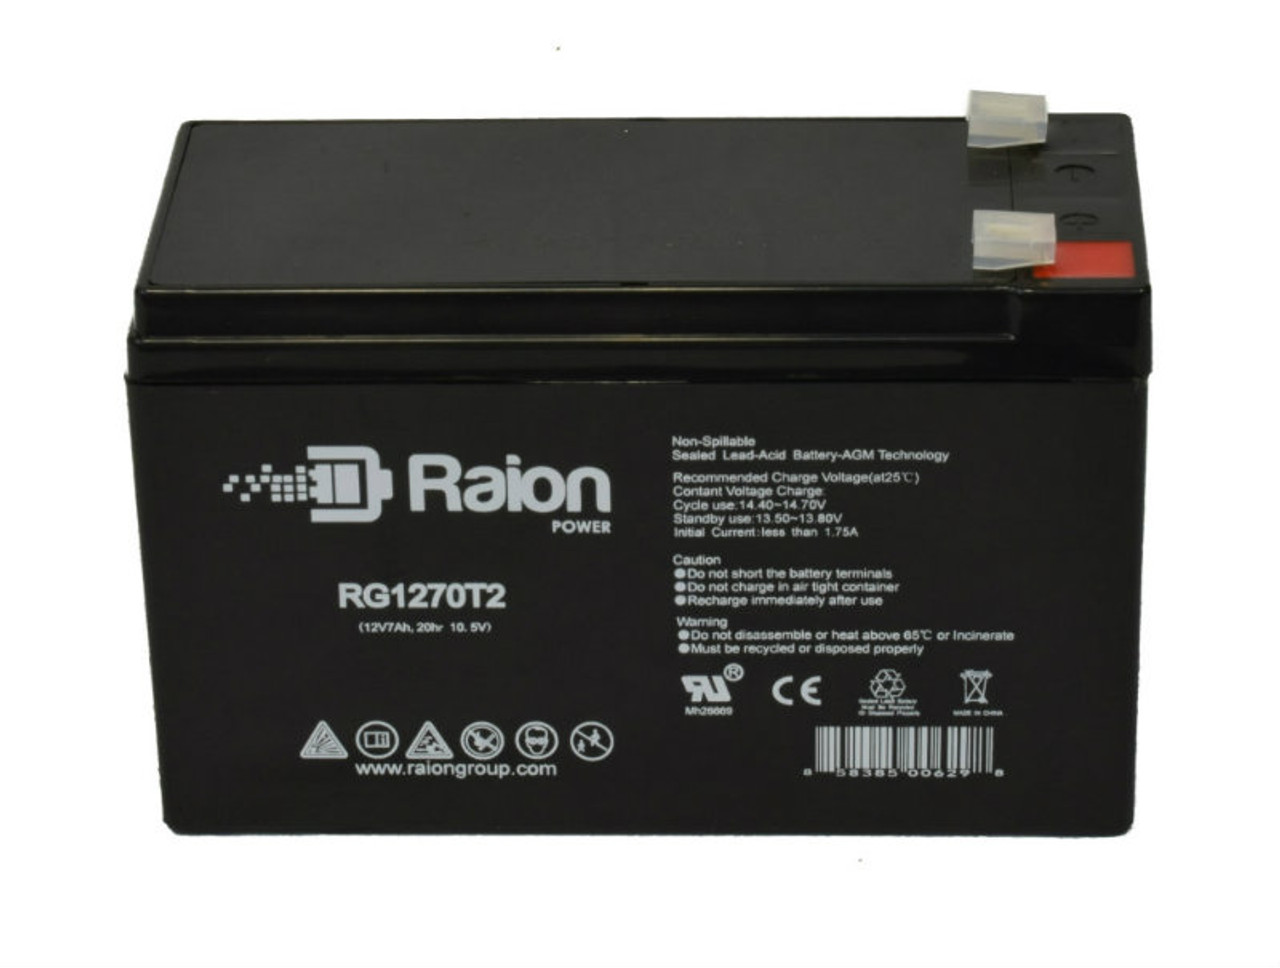 Raion Power RG1270T1 12V 7Ah Lead Acid Battery for Precor EFX821